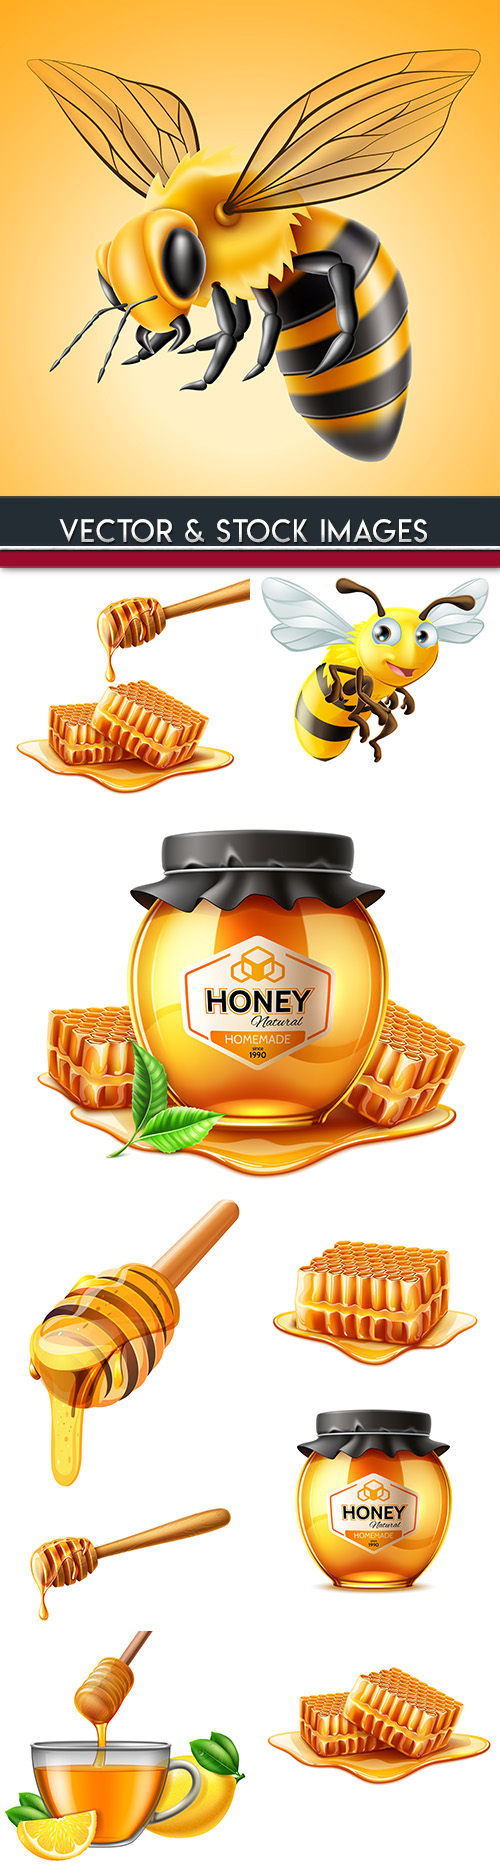 Bee and natural honey useful dessert 3d illustration